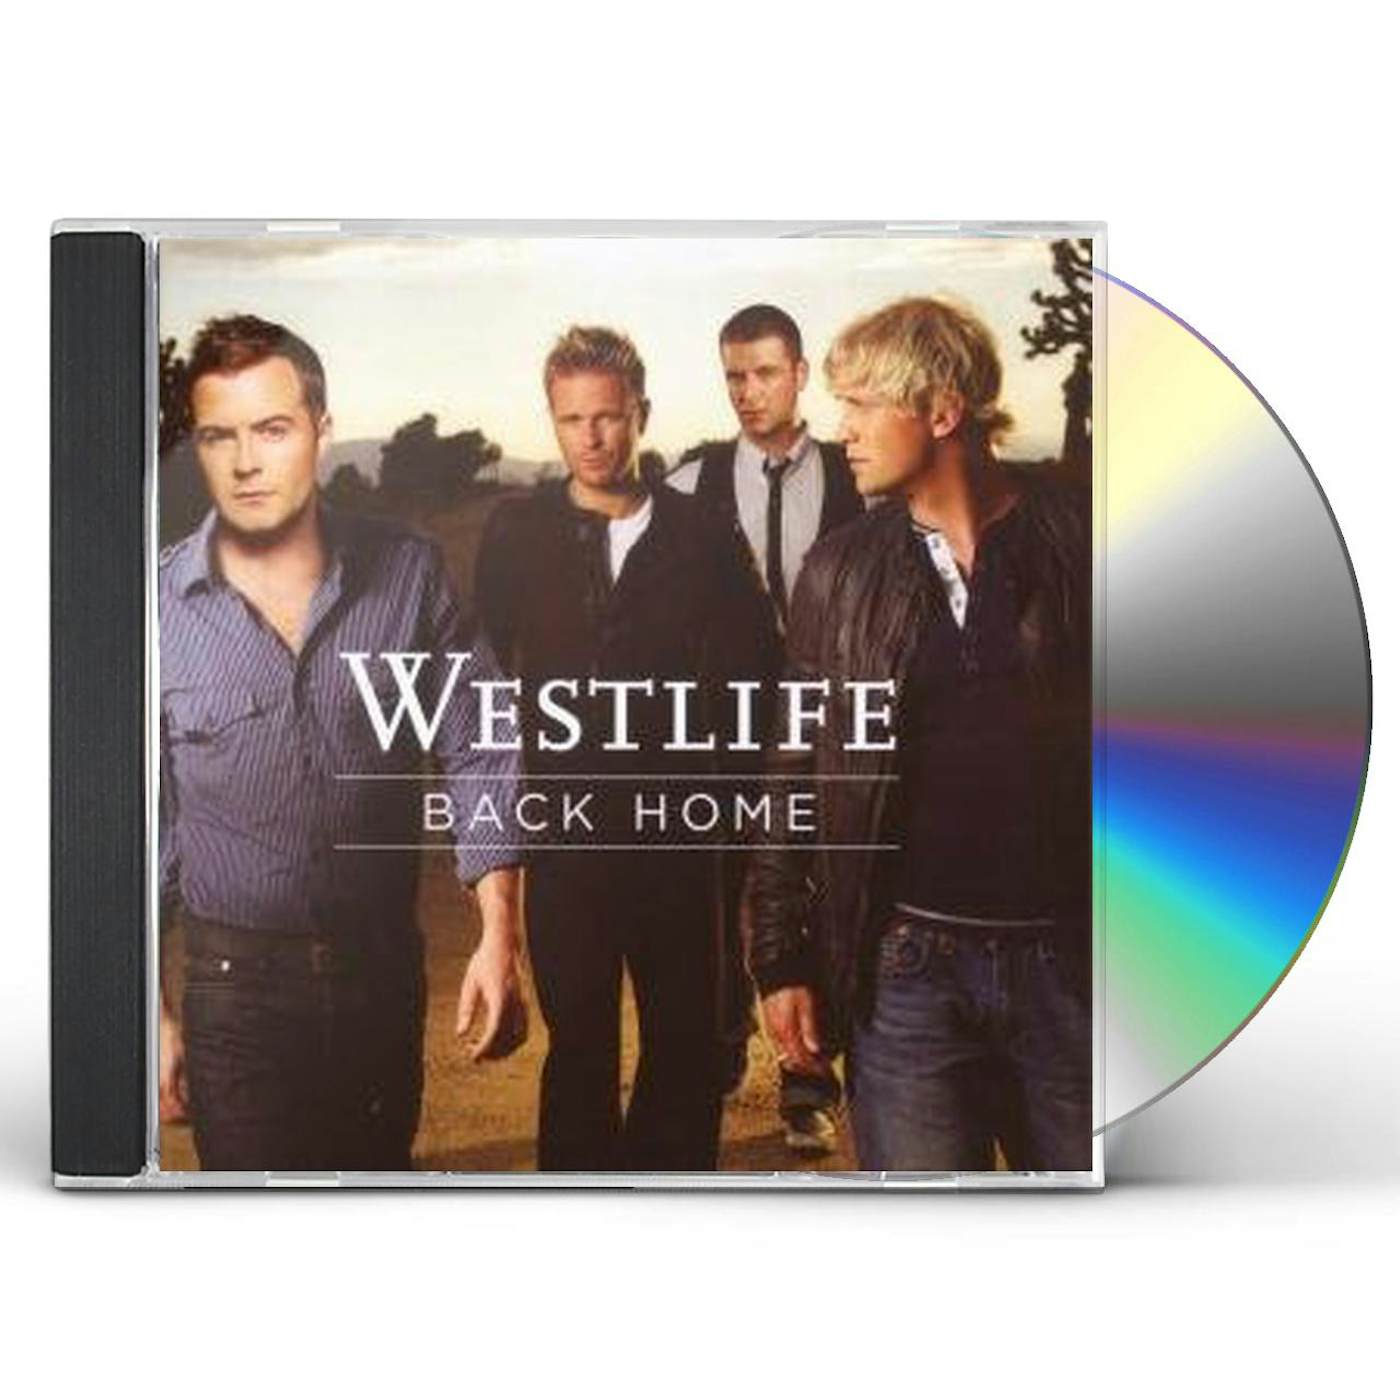 Back Home - Album by Westlife